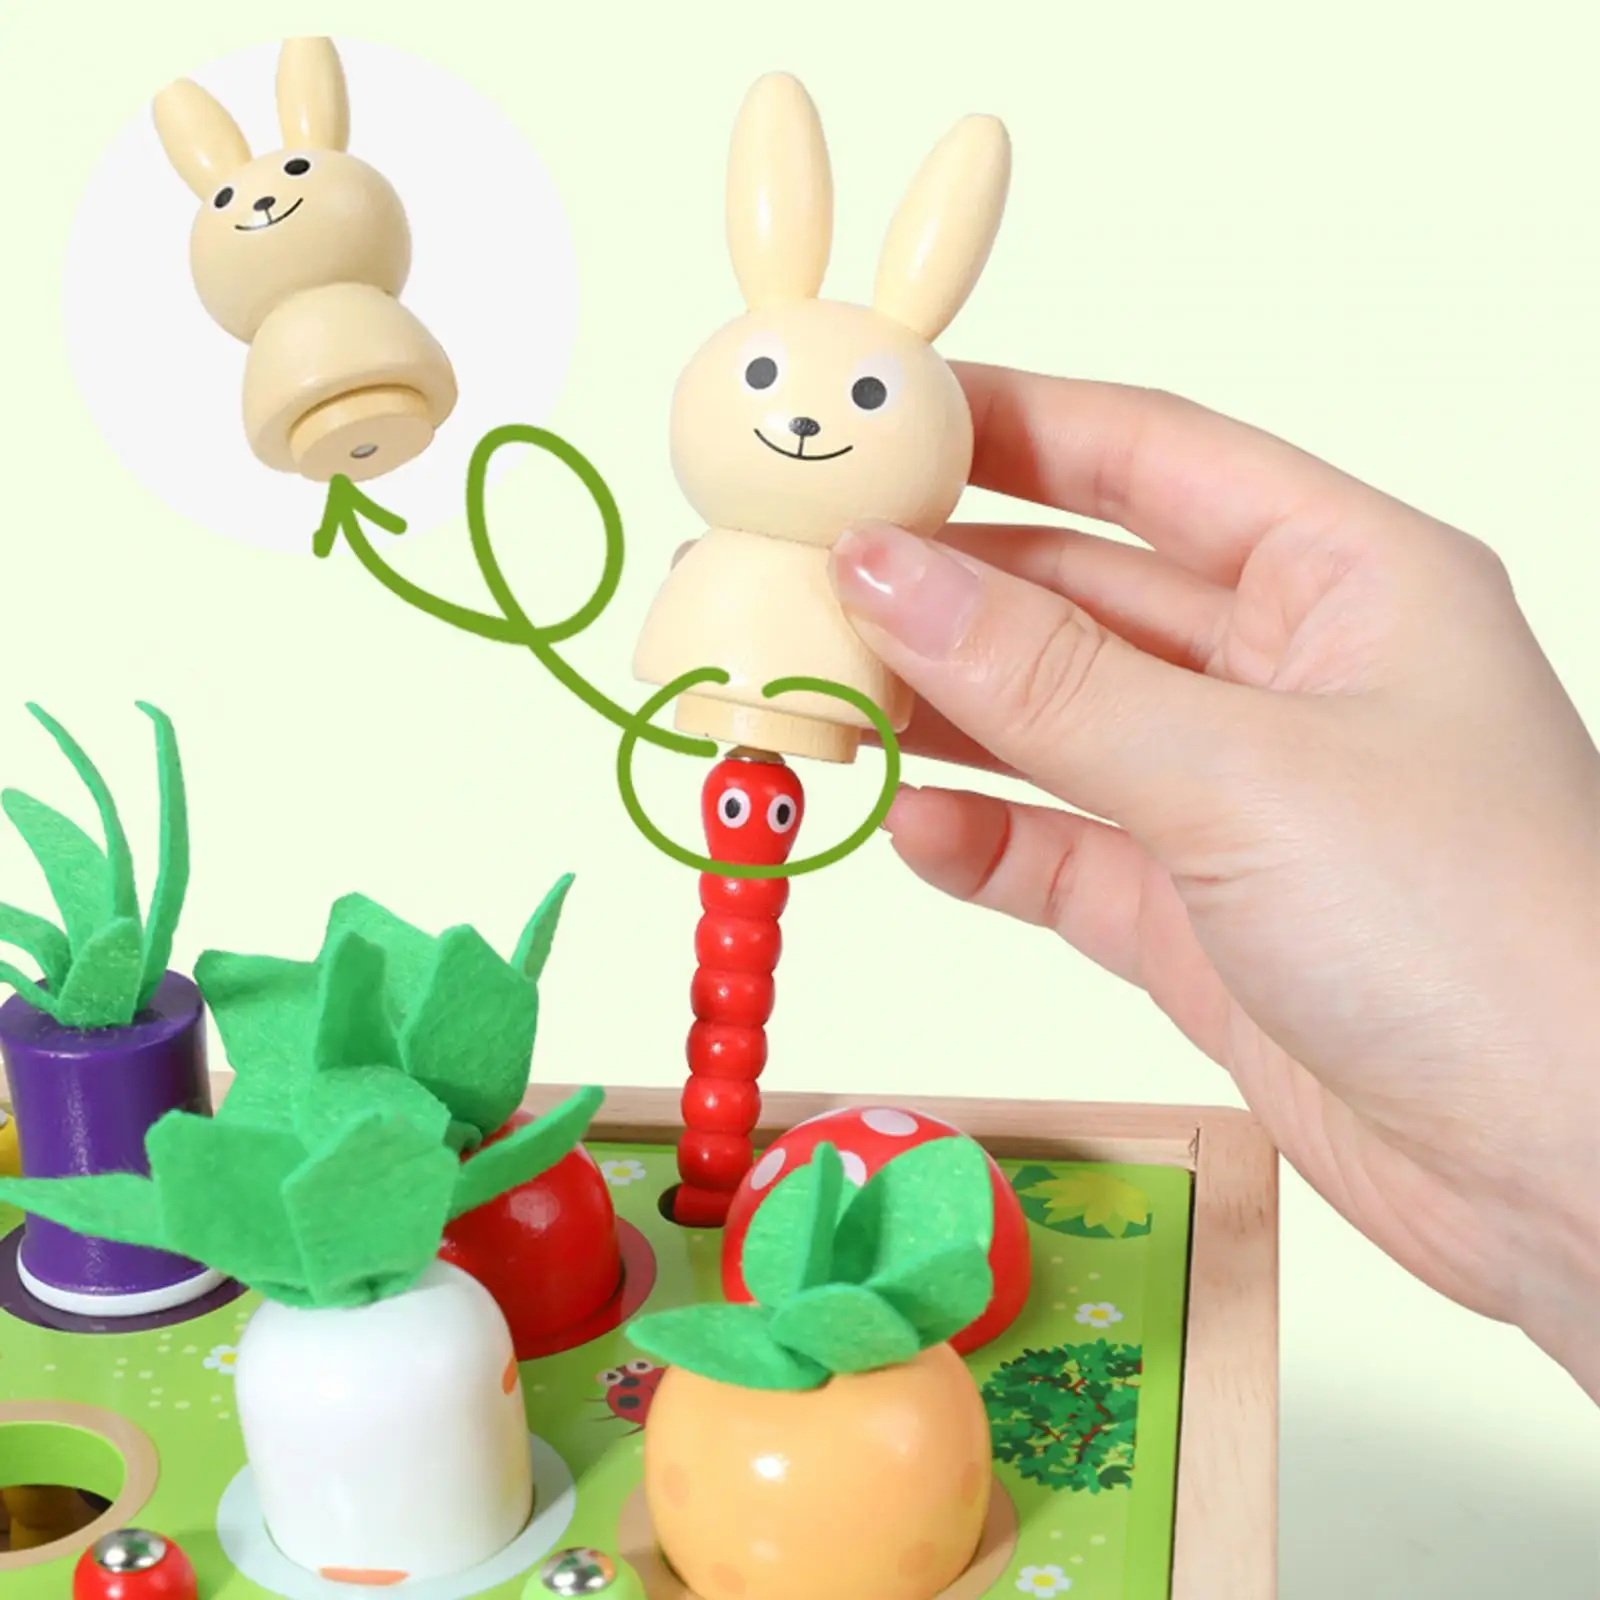 

Montessori Toys Fine Motor Skill Developmental Toy Carrot Harvest Game Wooden Toy Educational Toy for Boys Girls Kindergarten